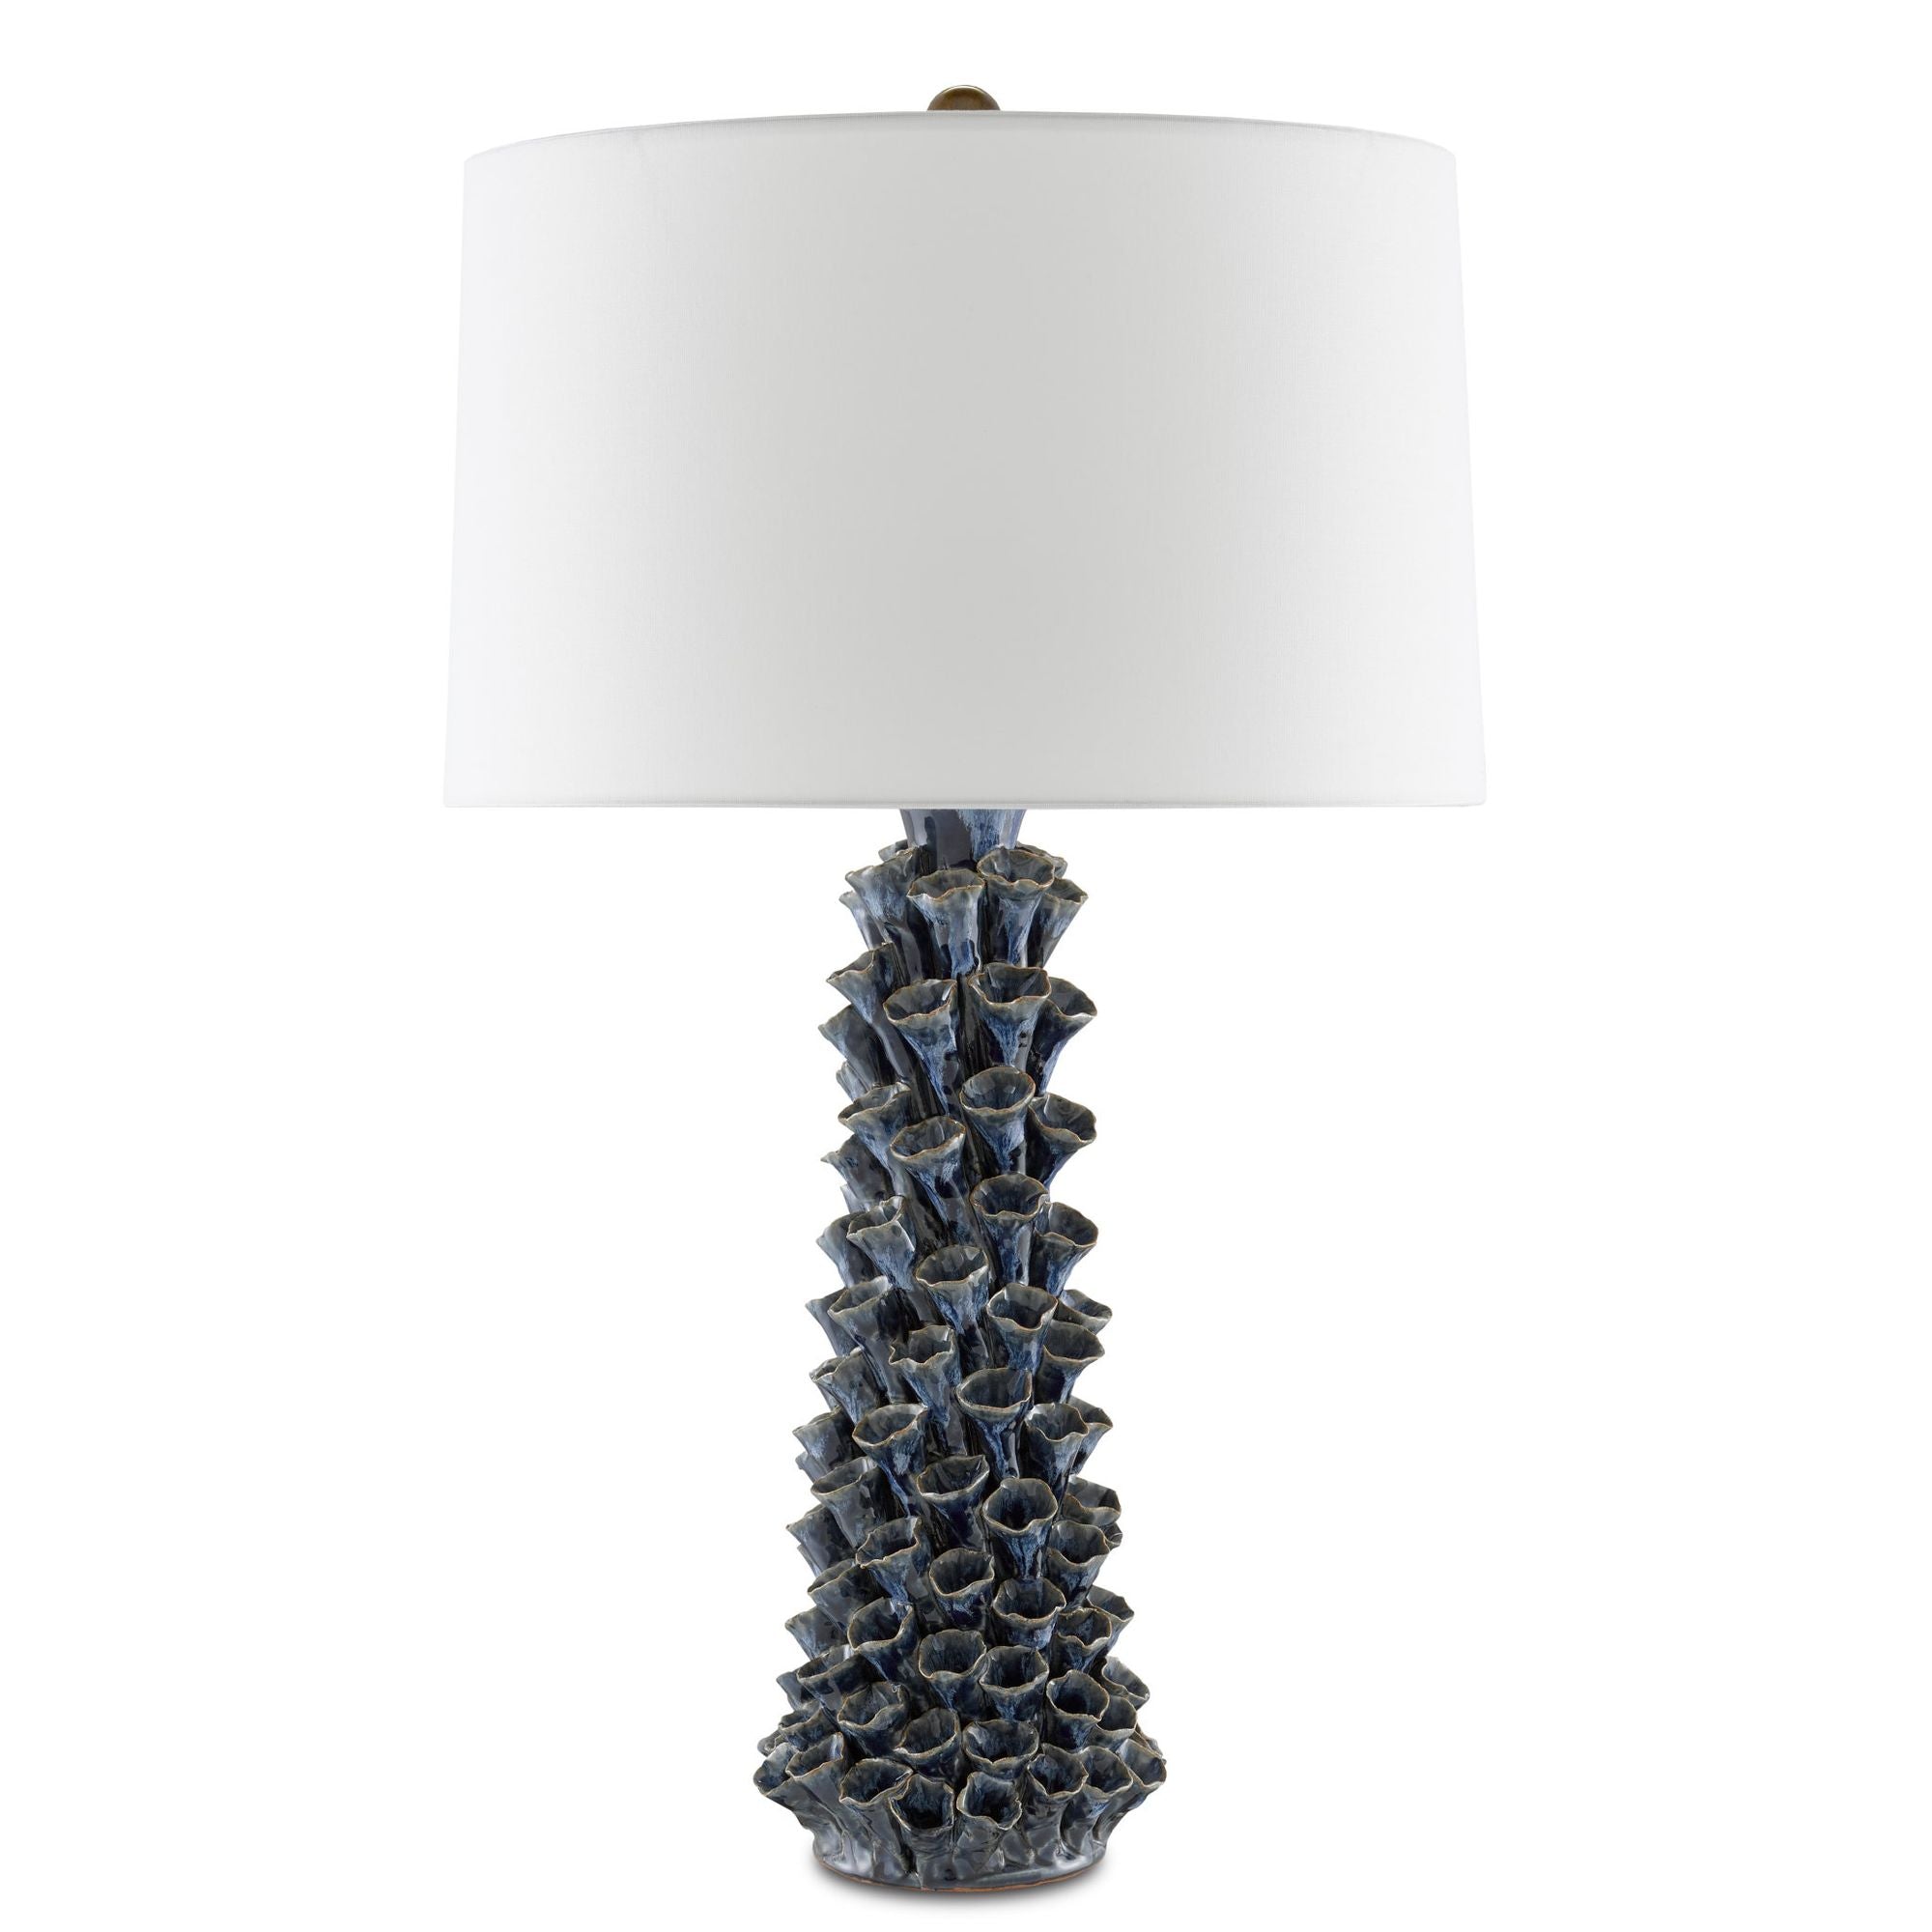 Sunken Blue Table Lamp - Blue Drip Glaze